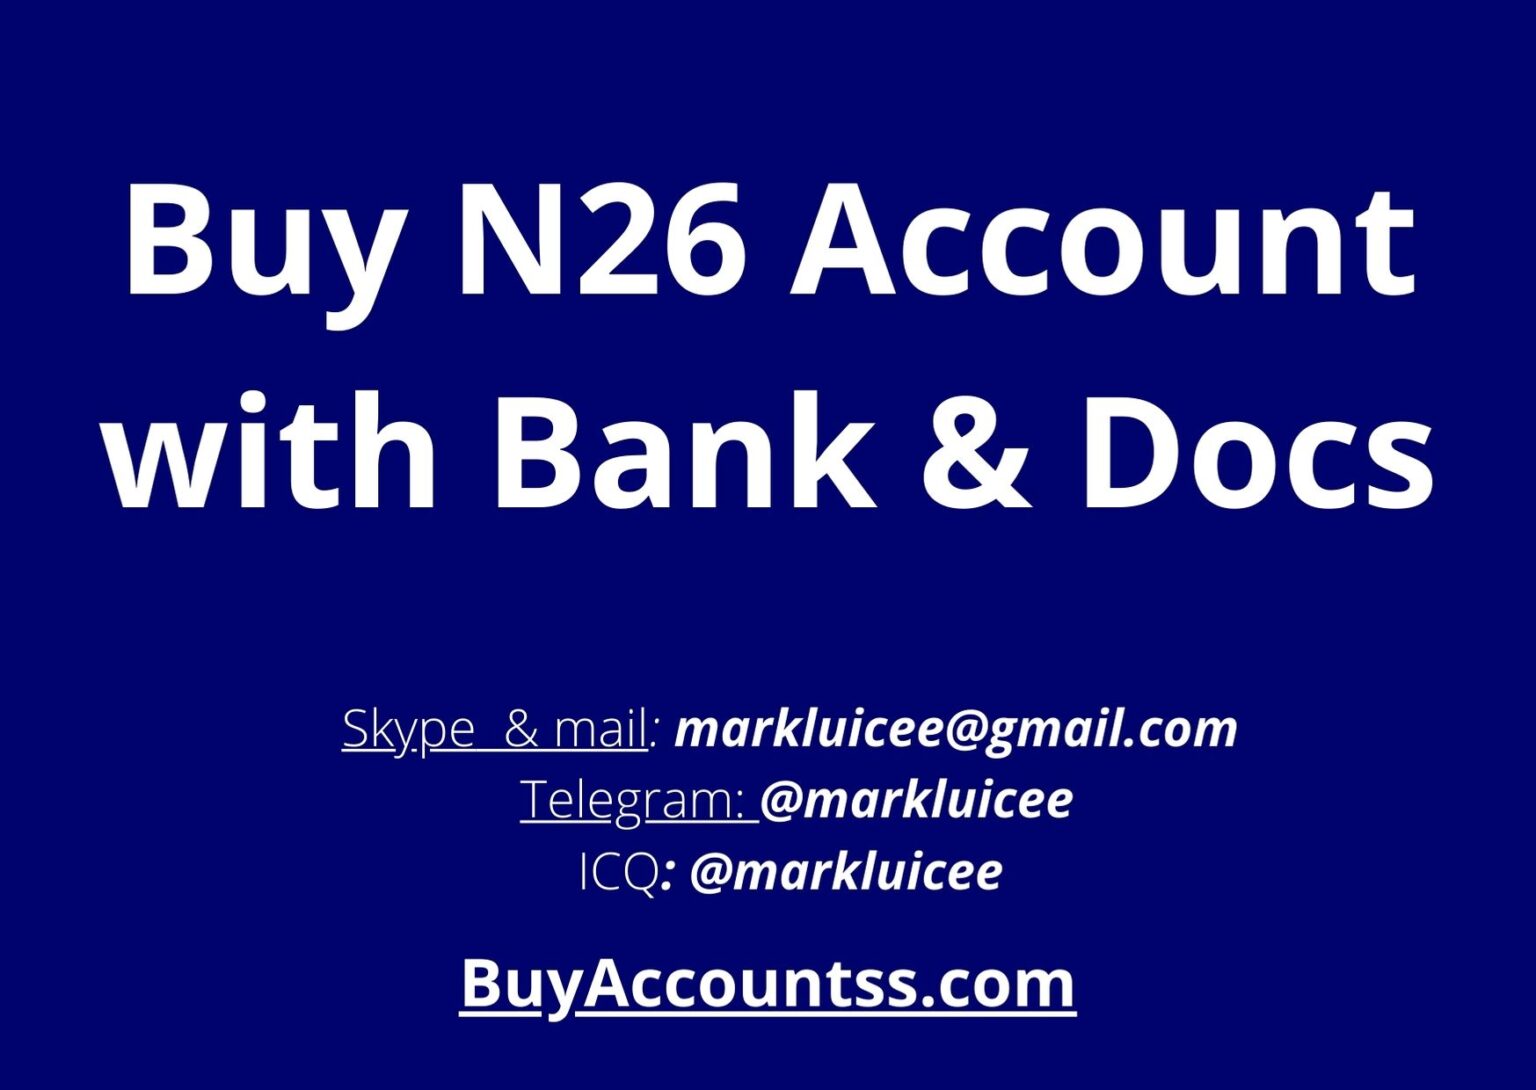 Buy N26 Account with Bank solution - BuyAccountss